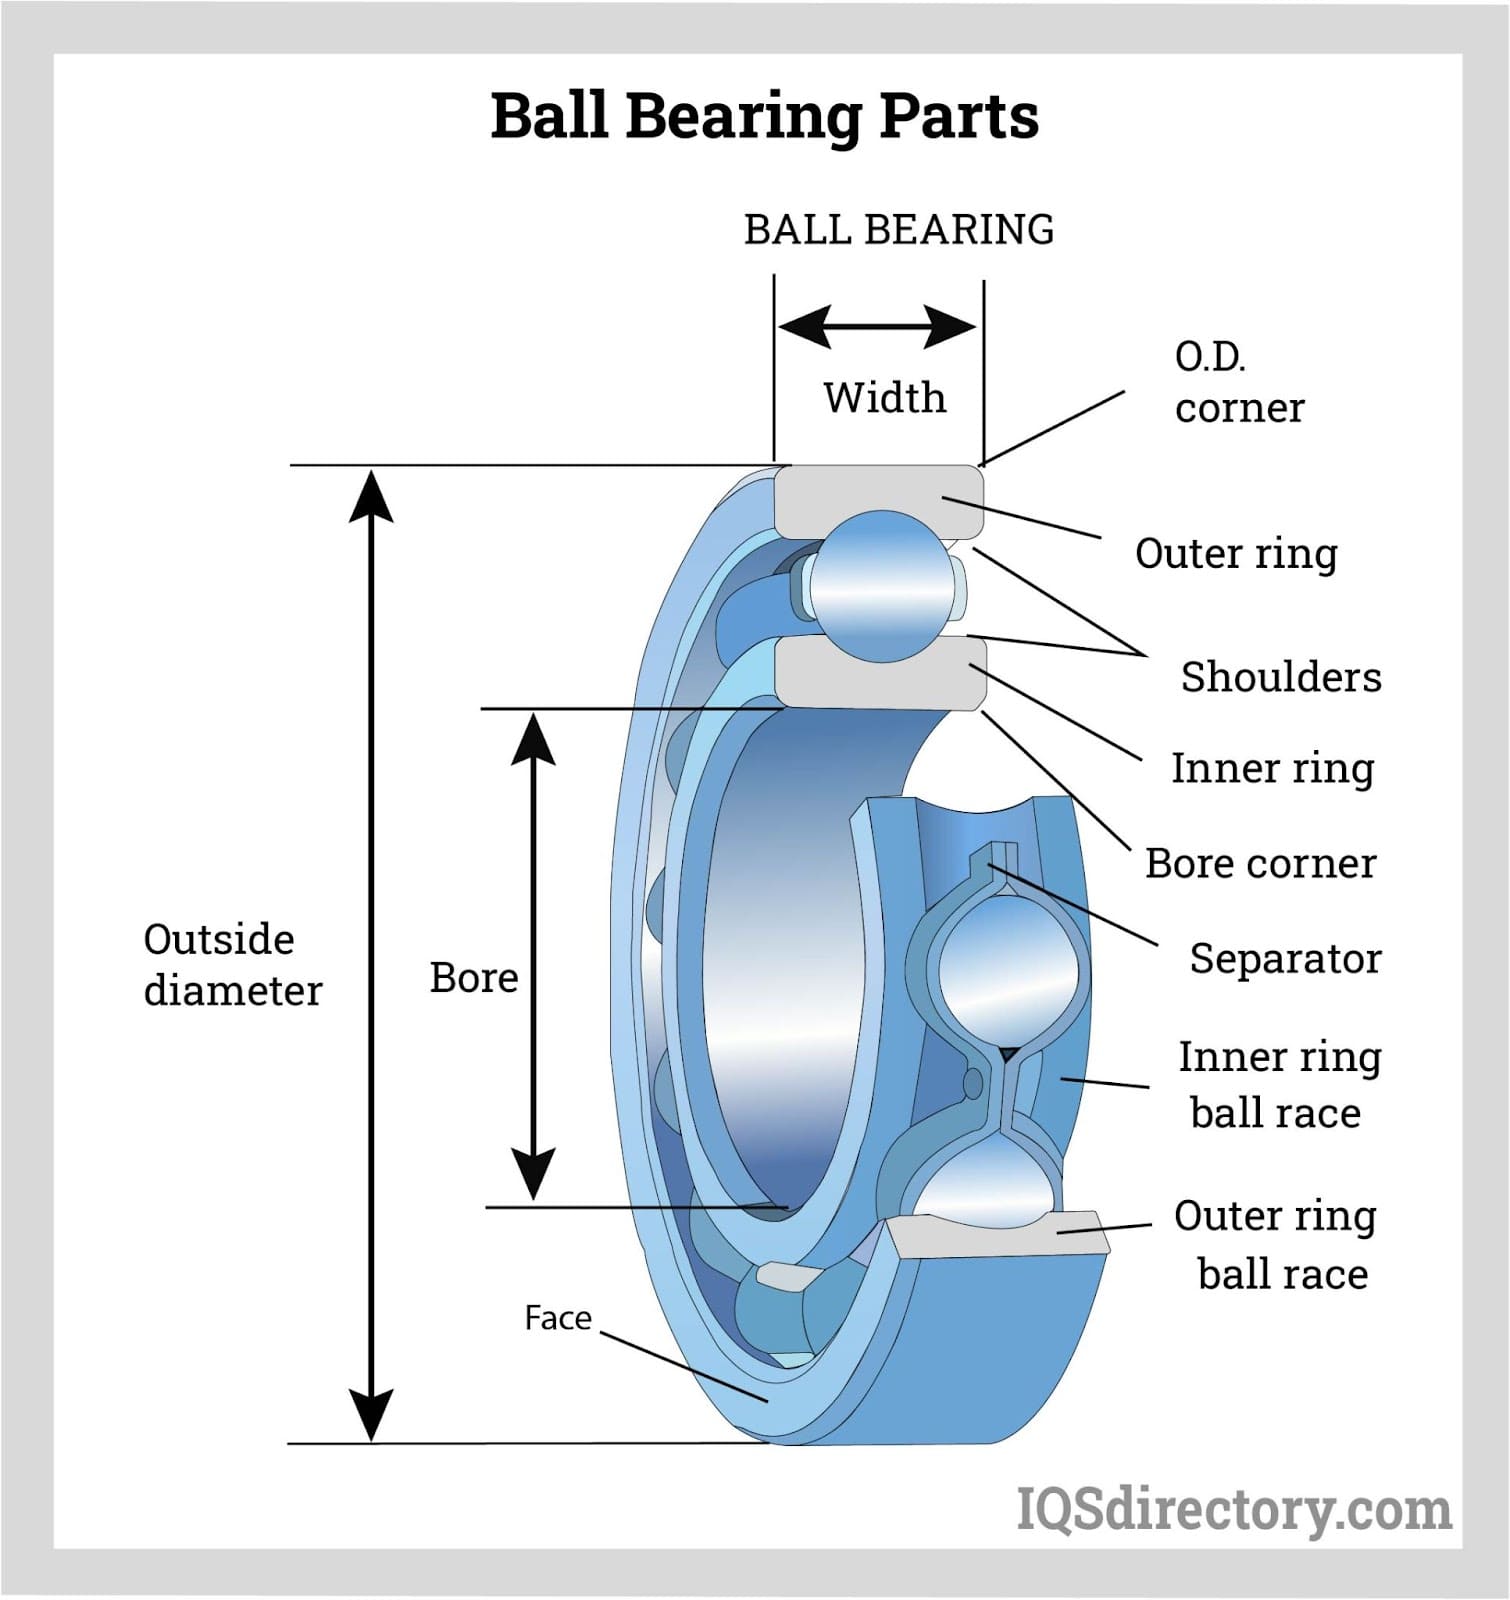 The Ball Bearing